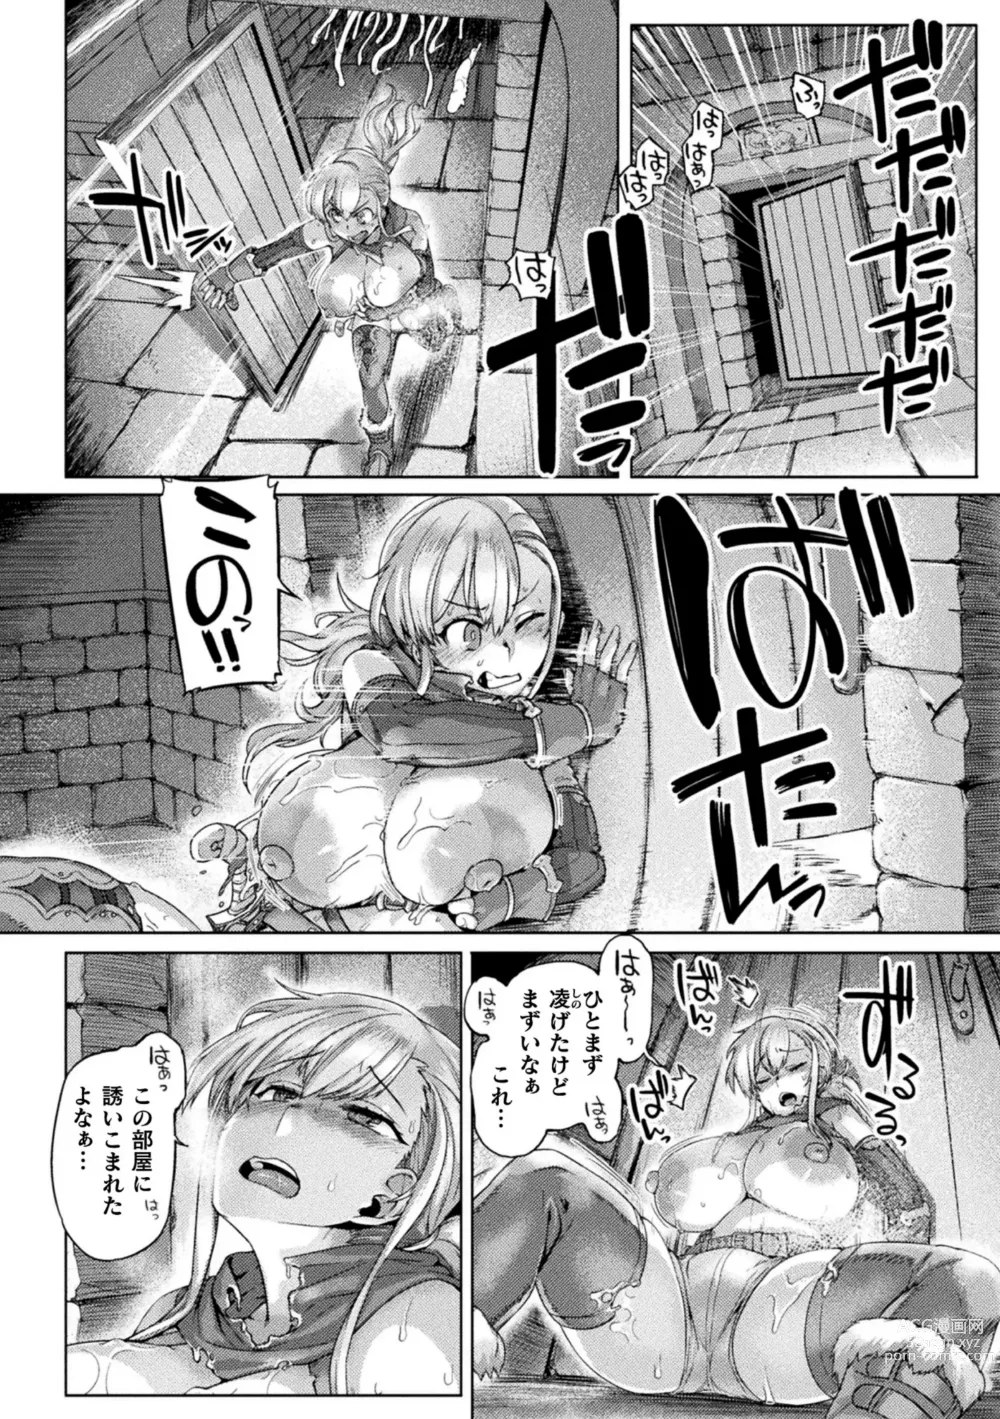 Page 12 of manga Kusshita Otome ga Ochiru Koro - When a surrendered maiden becomes sexually degraded